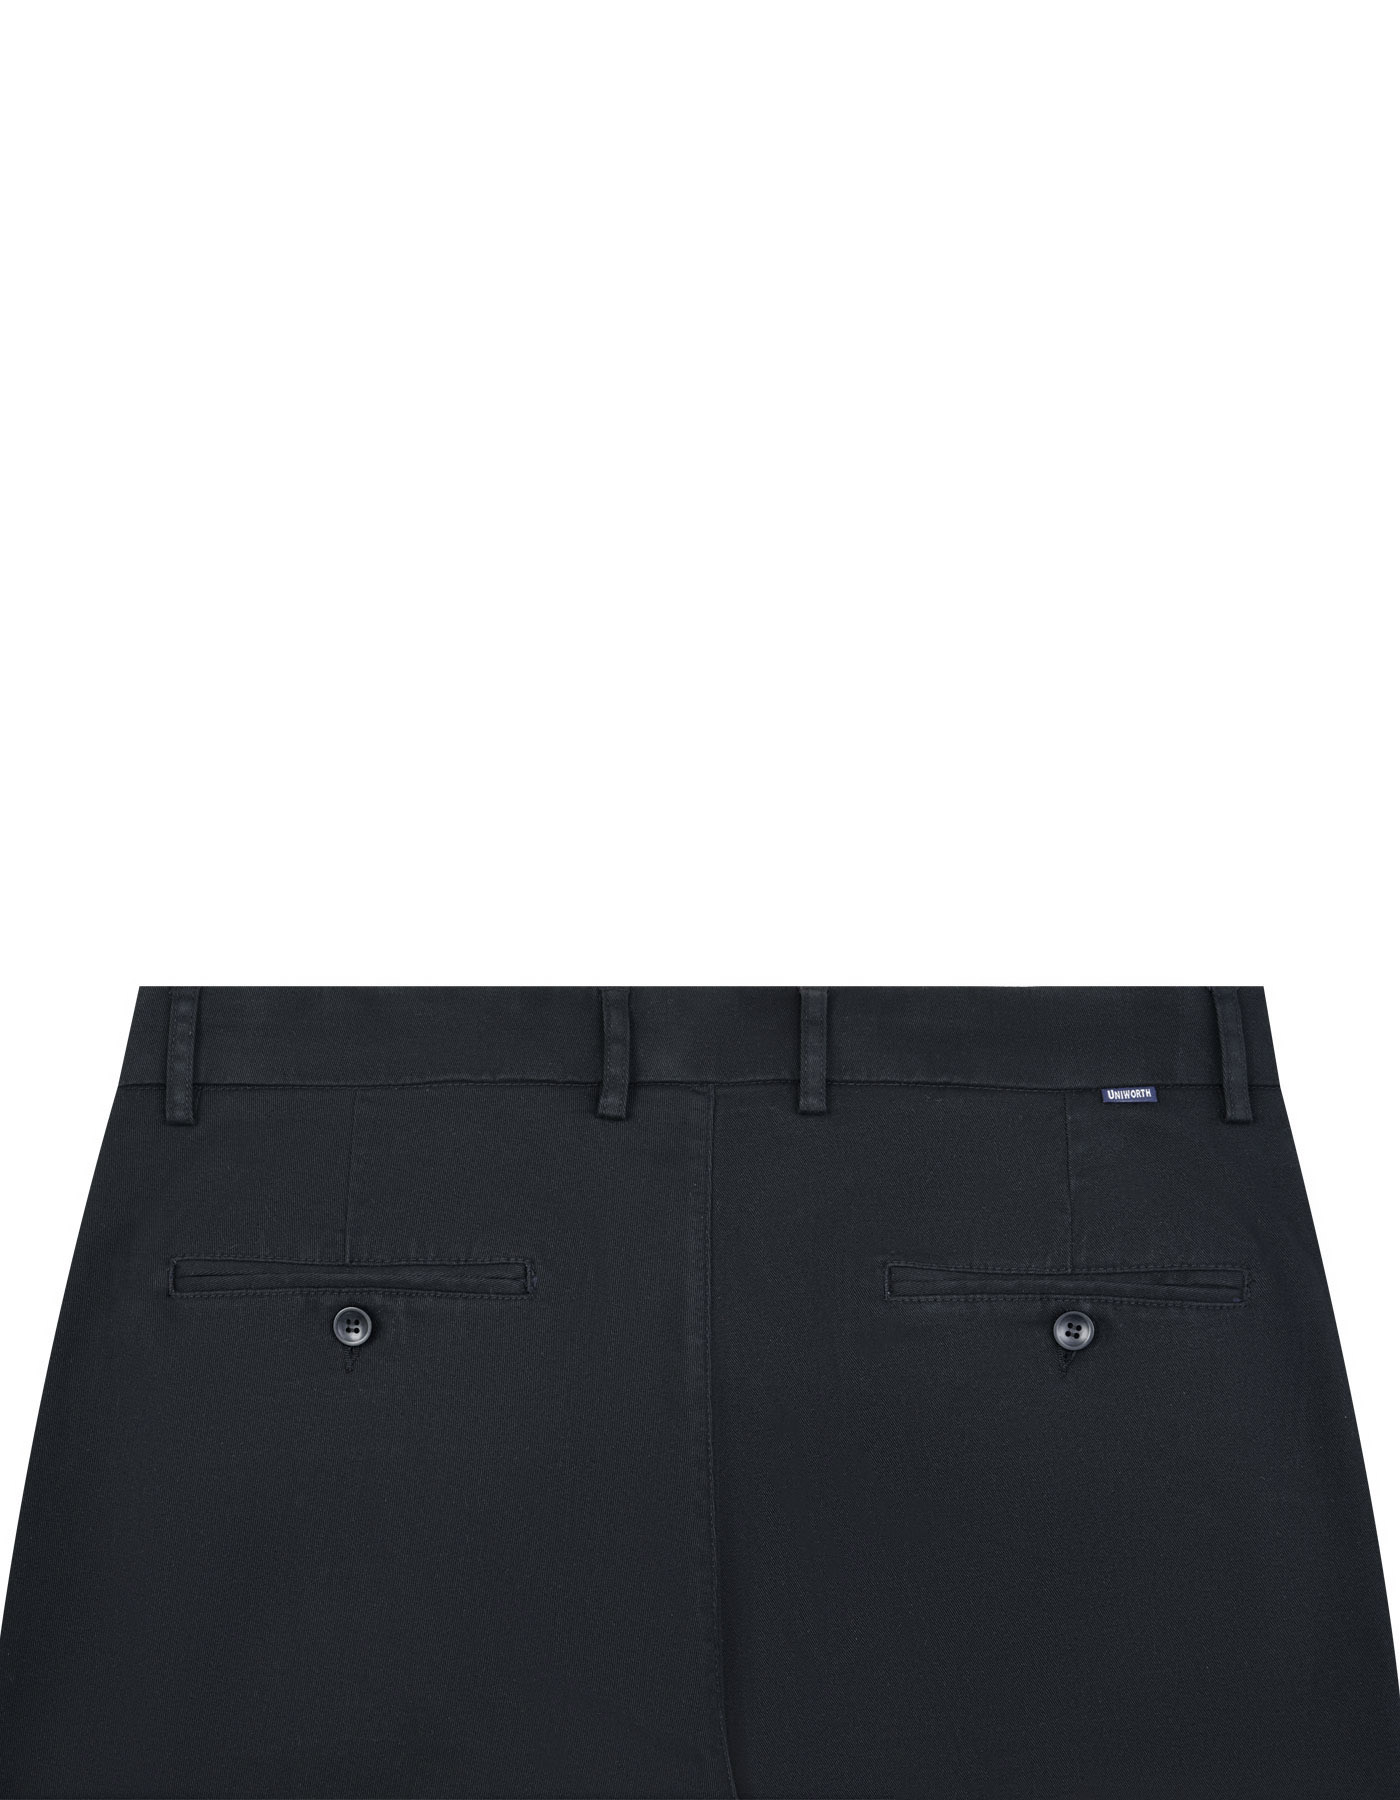 Buy Louis Philippe Black Trousers Online - 800538 | Louis Philippe-saigonsouth.com.vn